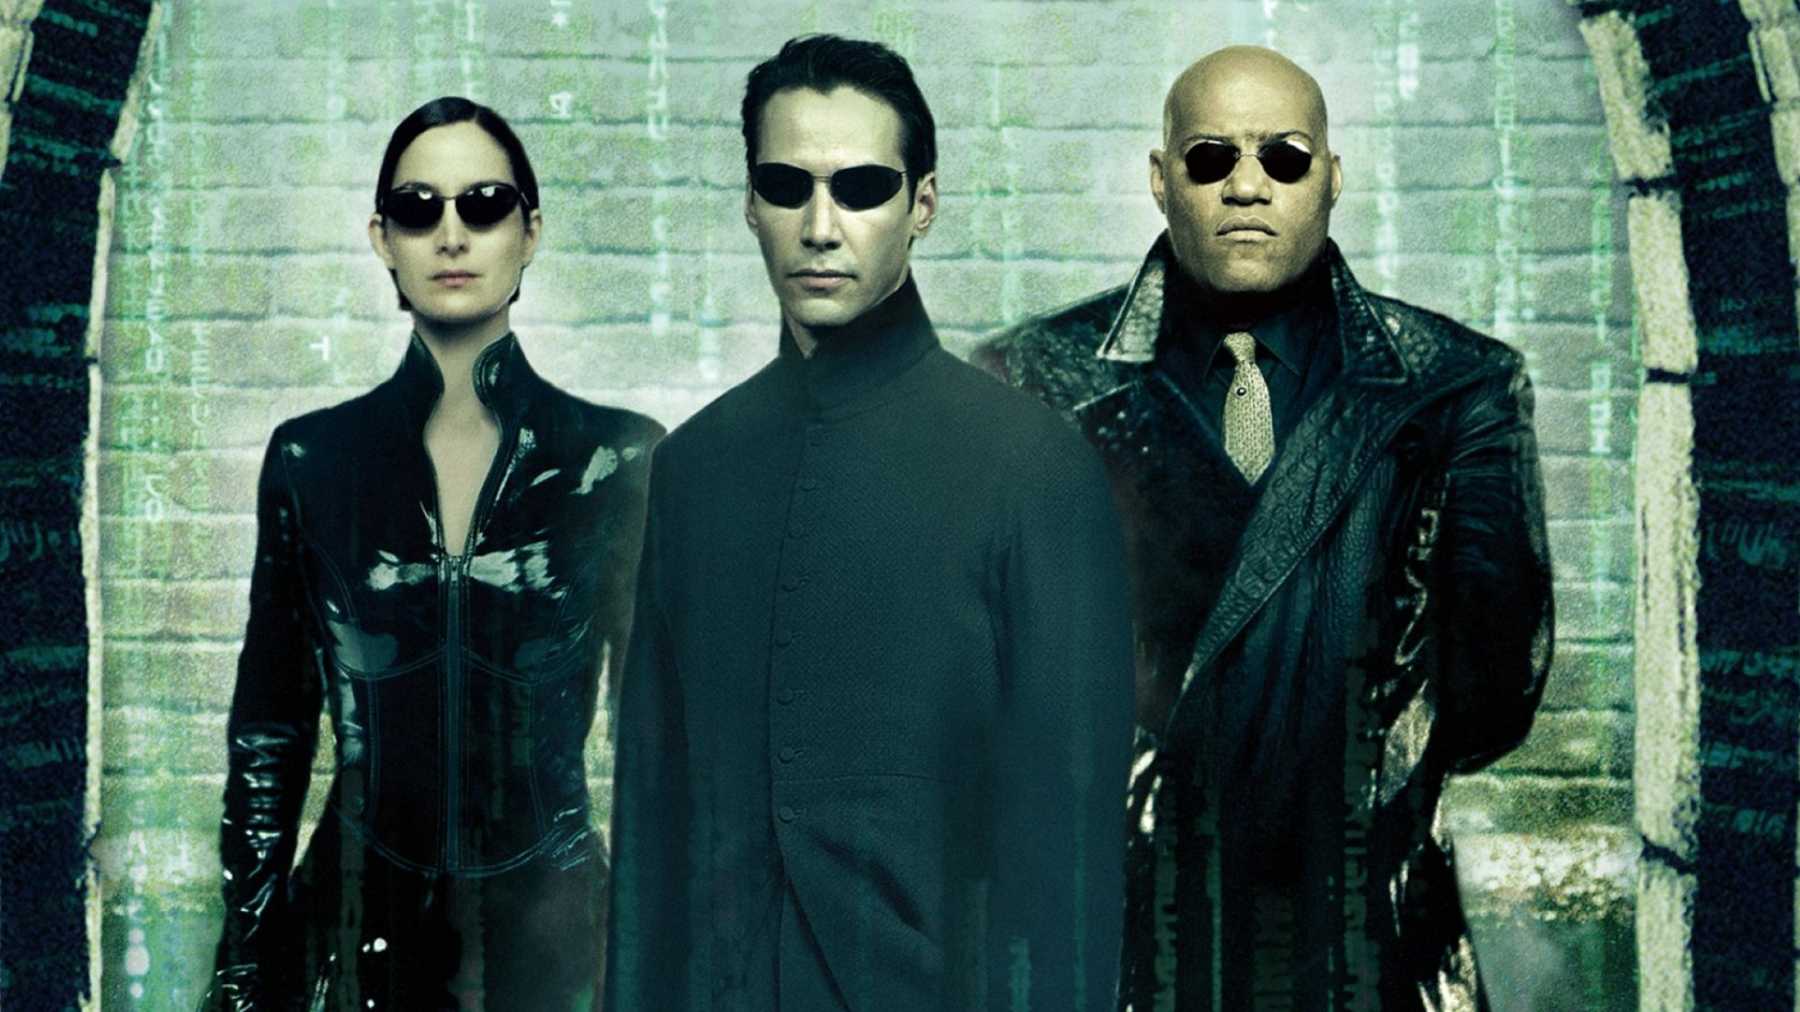 The Matrix.